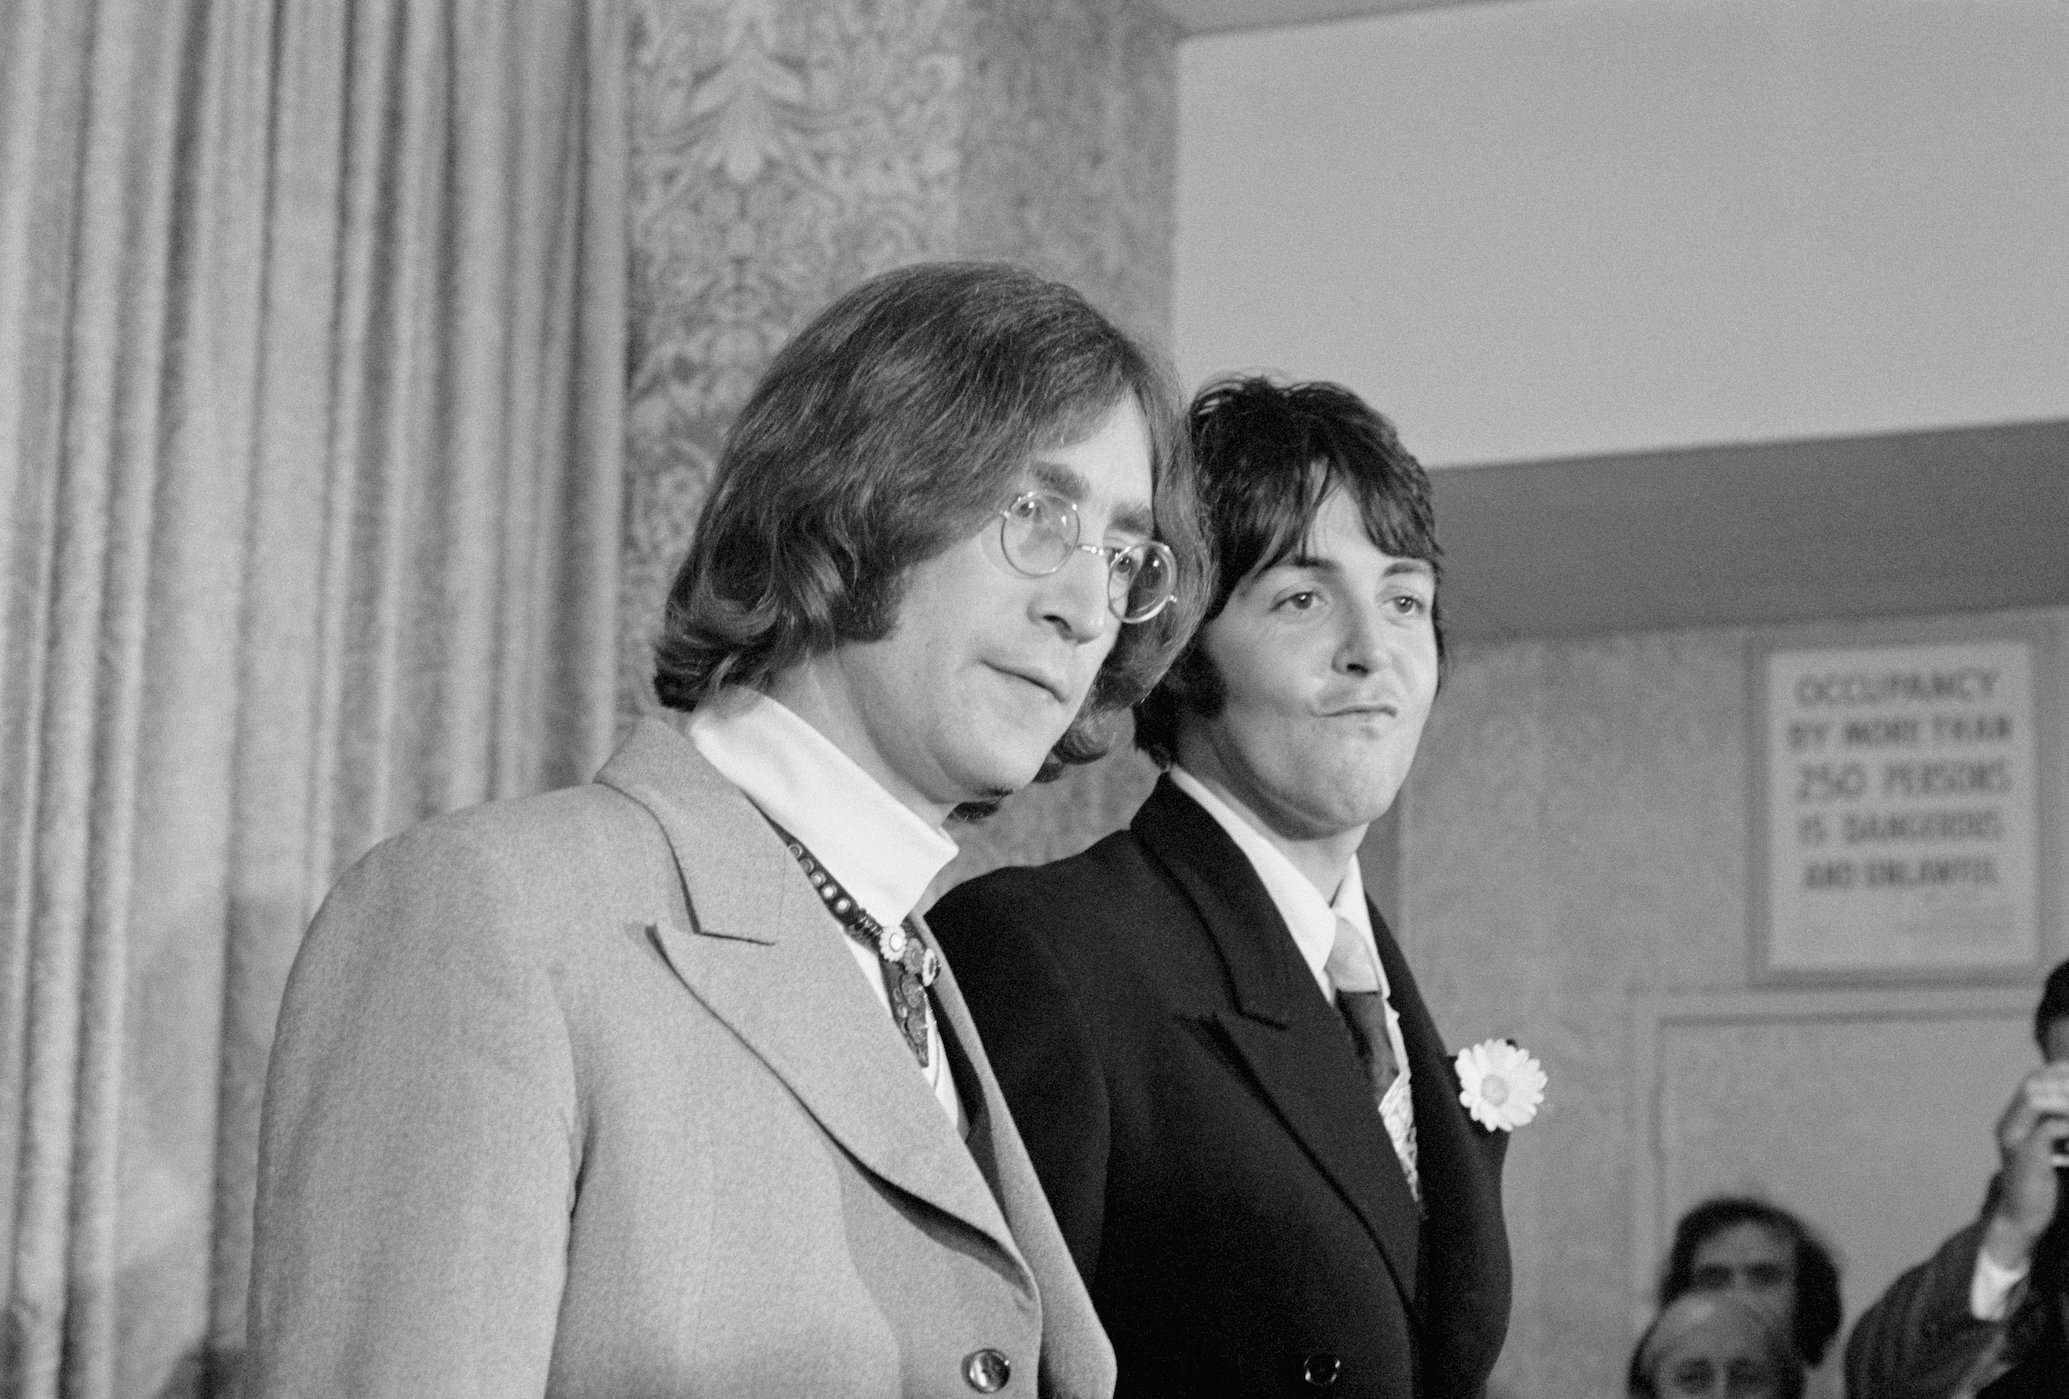 Paul McCartney는 John Lennon을 처음 만났을 때 가장 인상 깊었던 점을 공유했습니다.